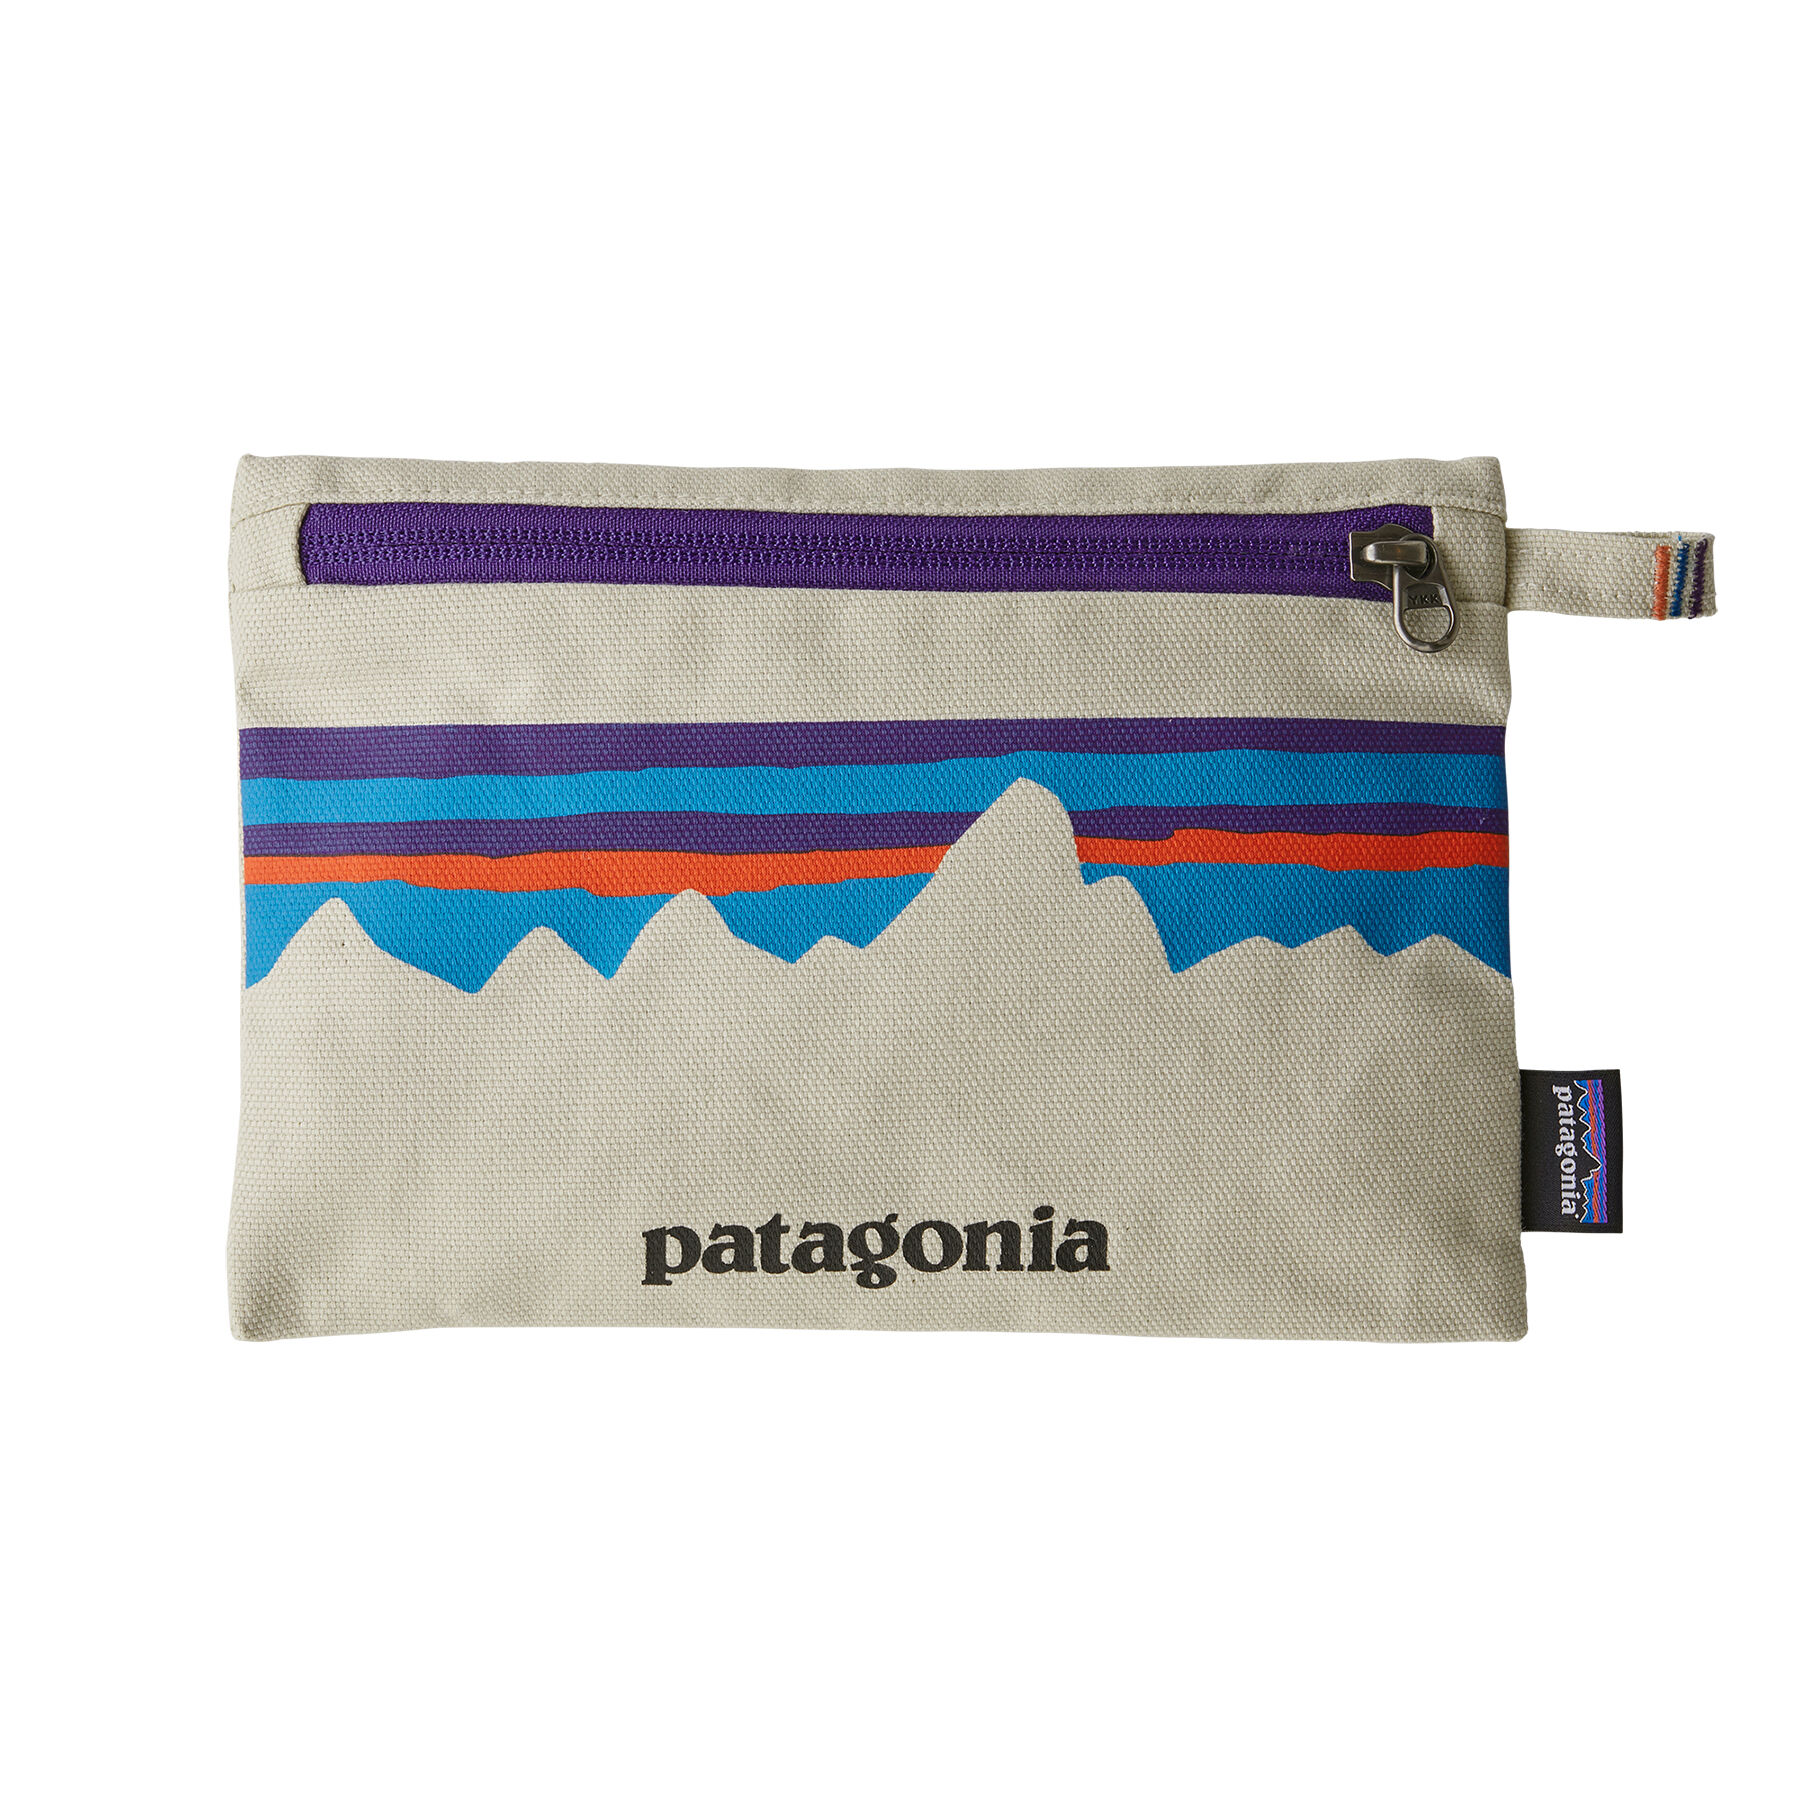 Patagonia Zippered Pouch - Borsa